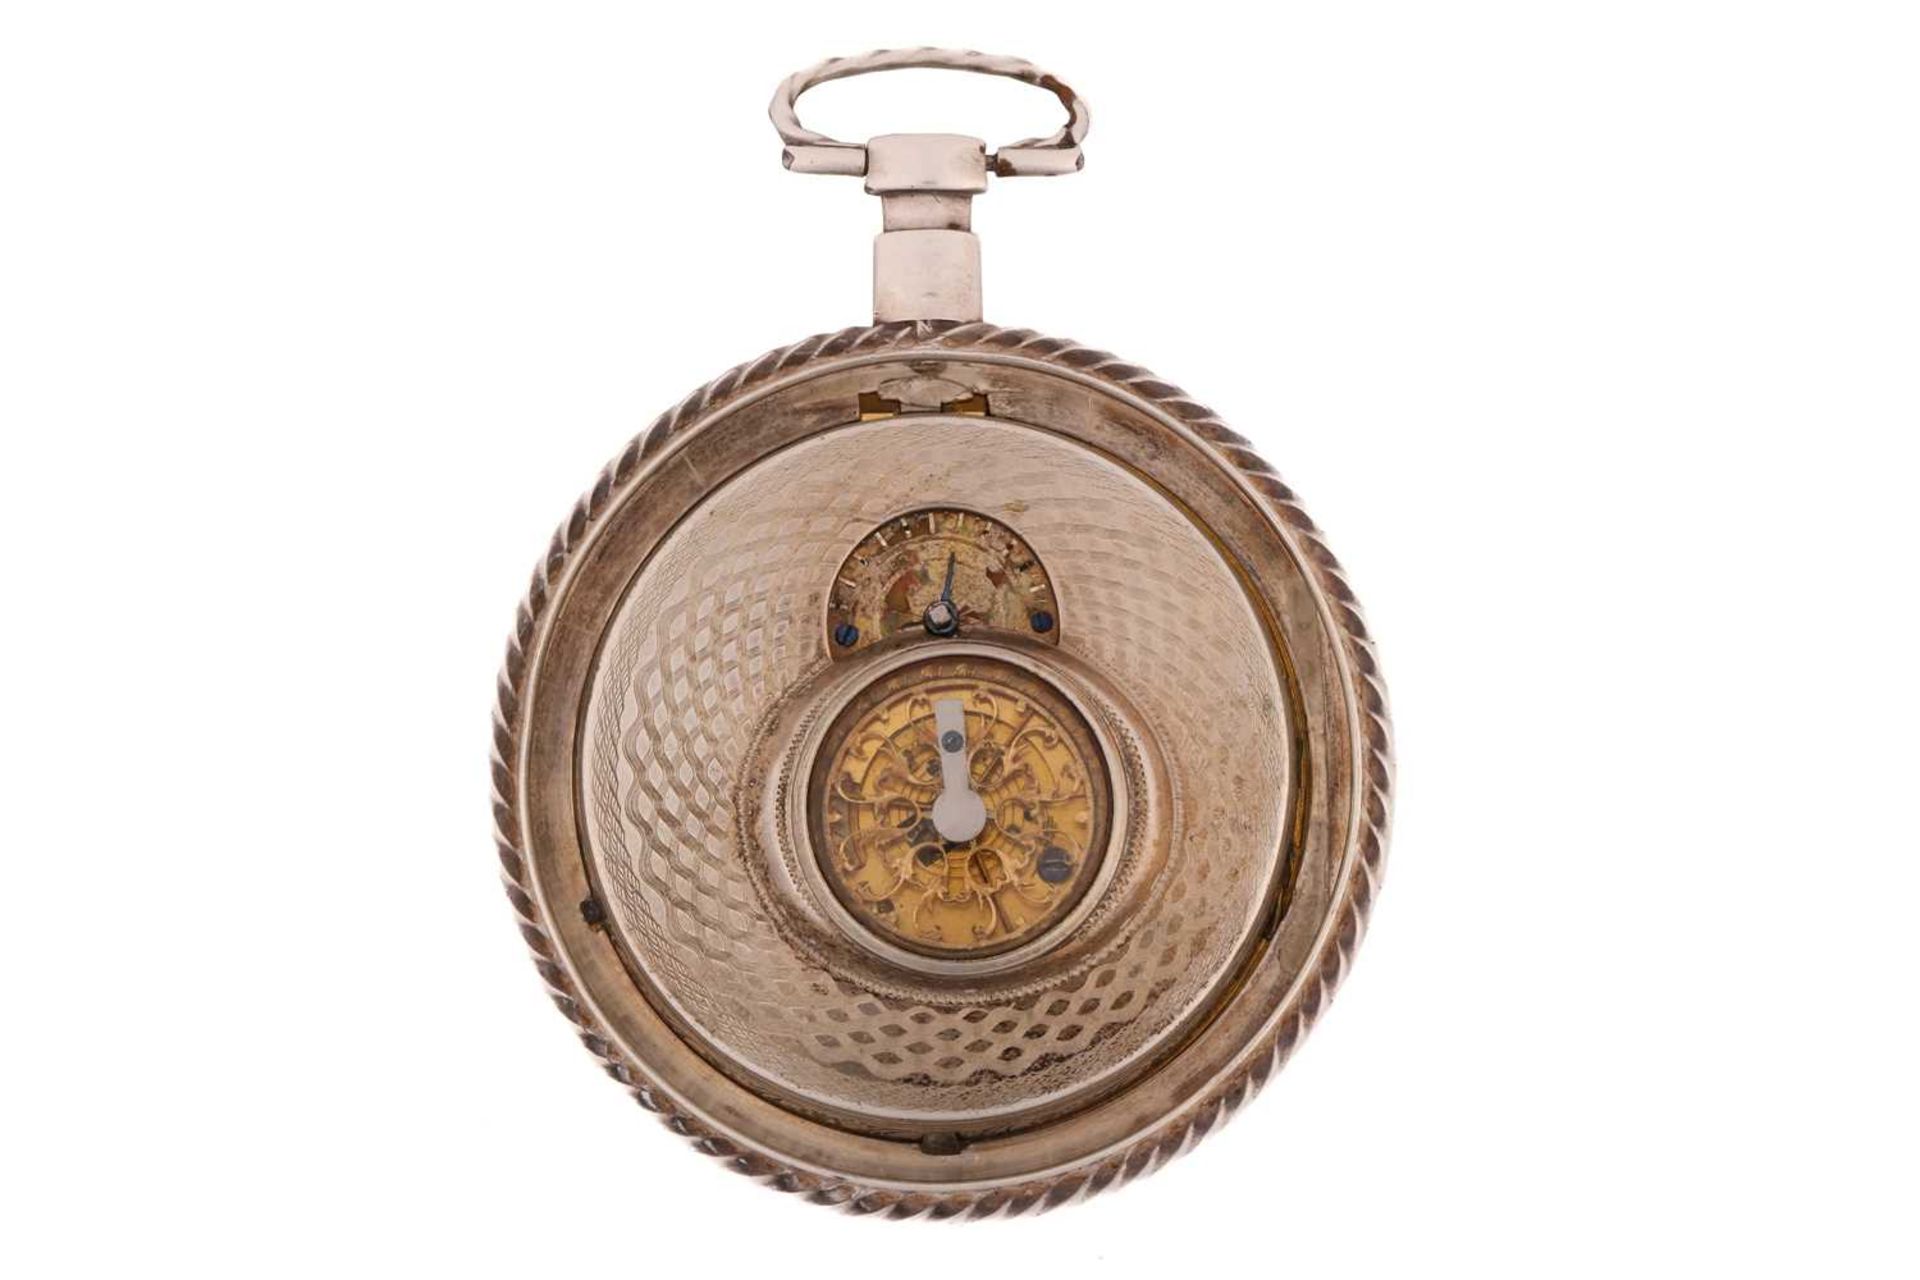 A Breguet Et Fils open-face pocket watch, featuring a key-wound signed 'Breguet Et Fils' verge fusée - Image 6 of 14